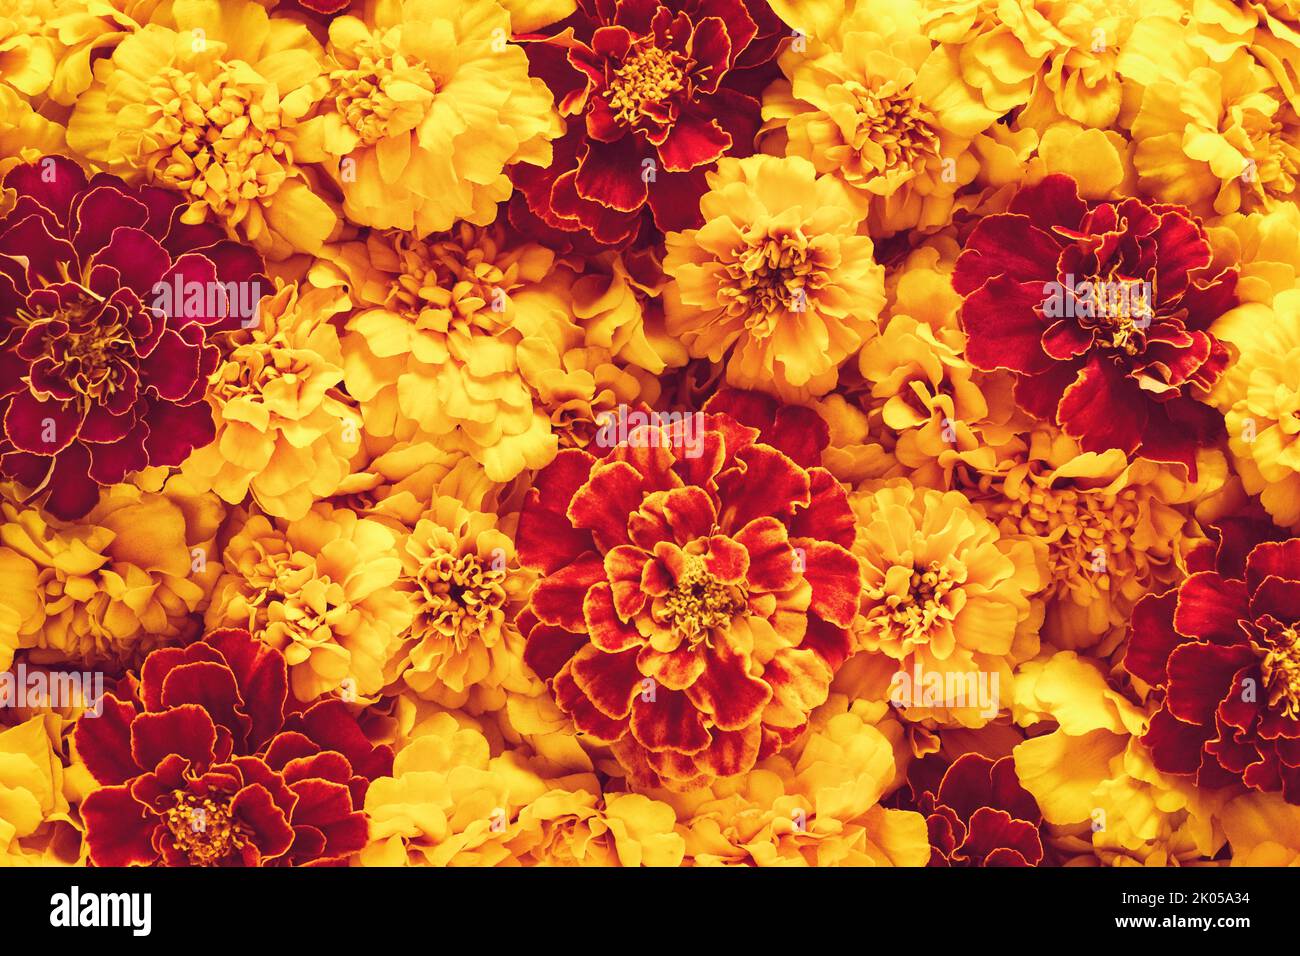 Marigold flowers texture, holiday decoration, orange and red marigolds background Stock Photo